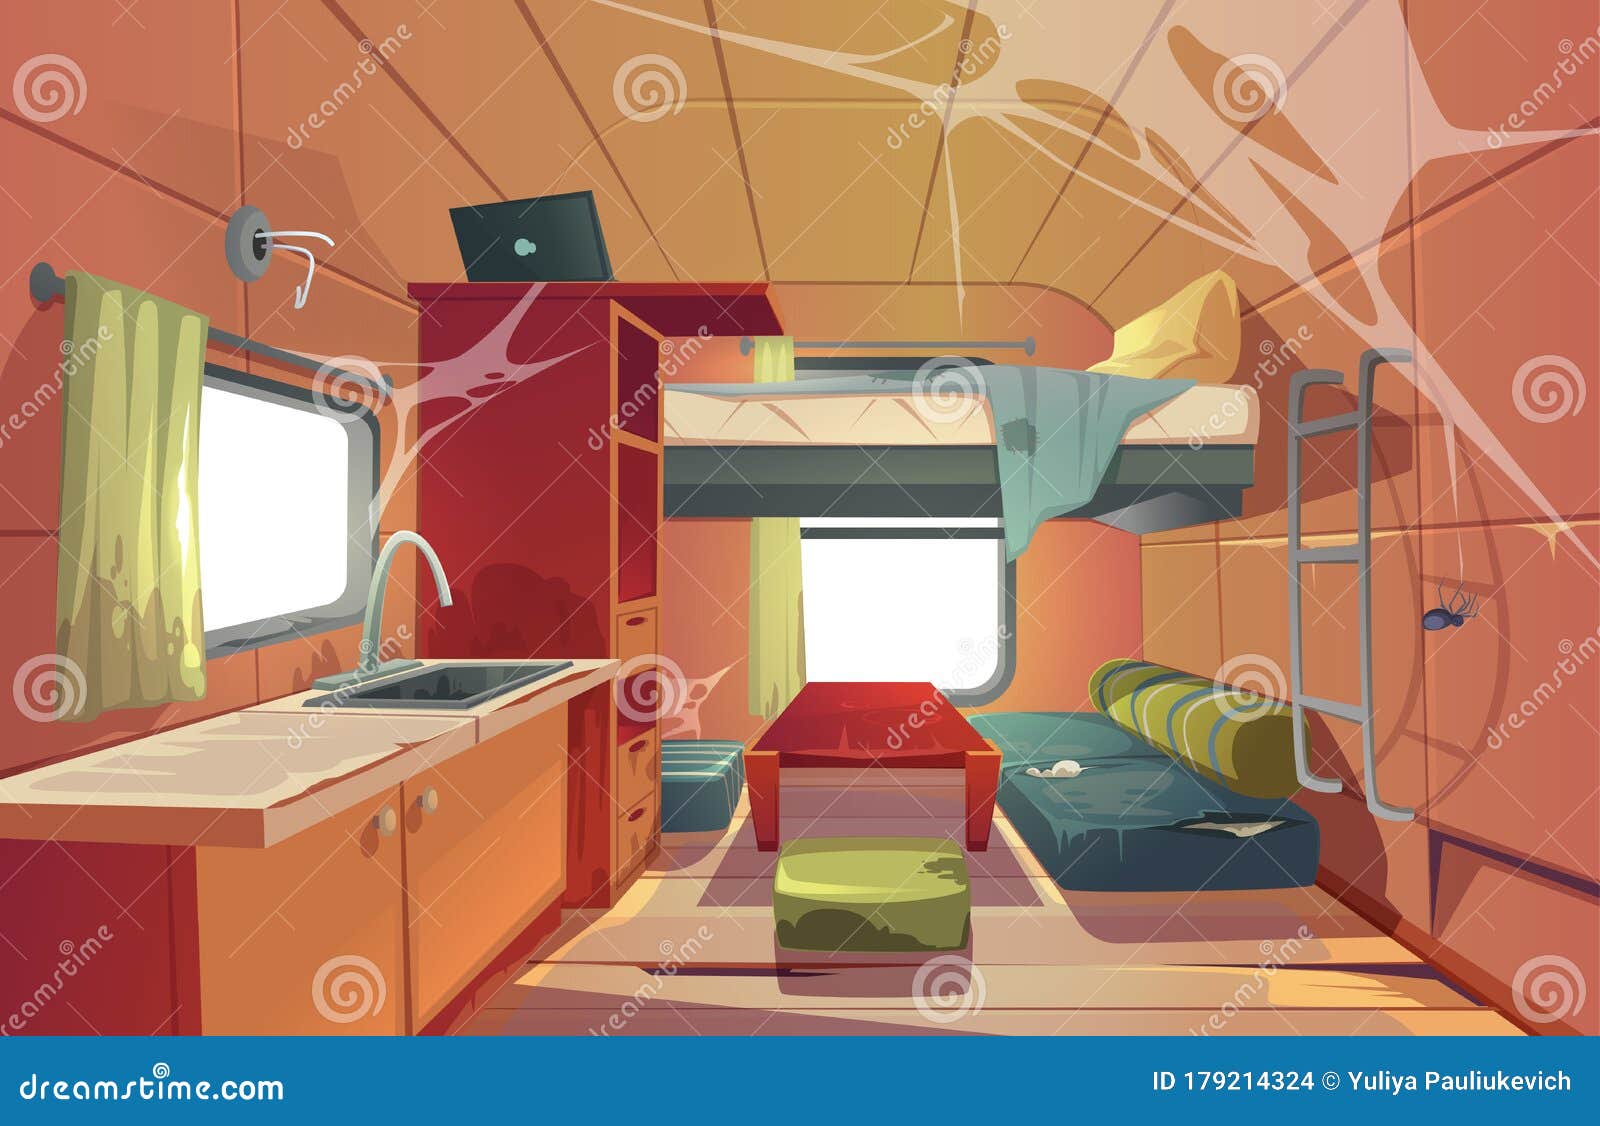 abandoned camping trailer car interior motor home